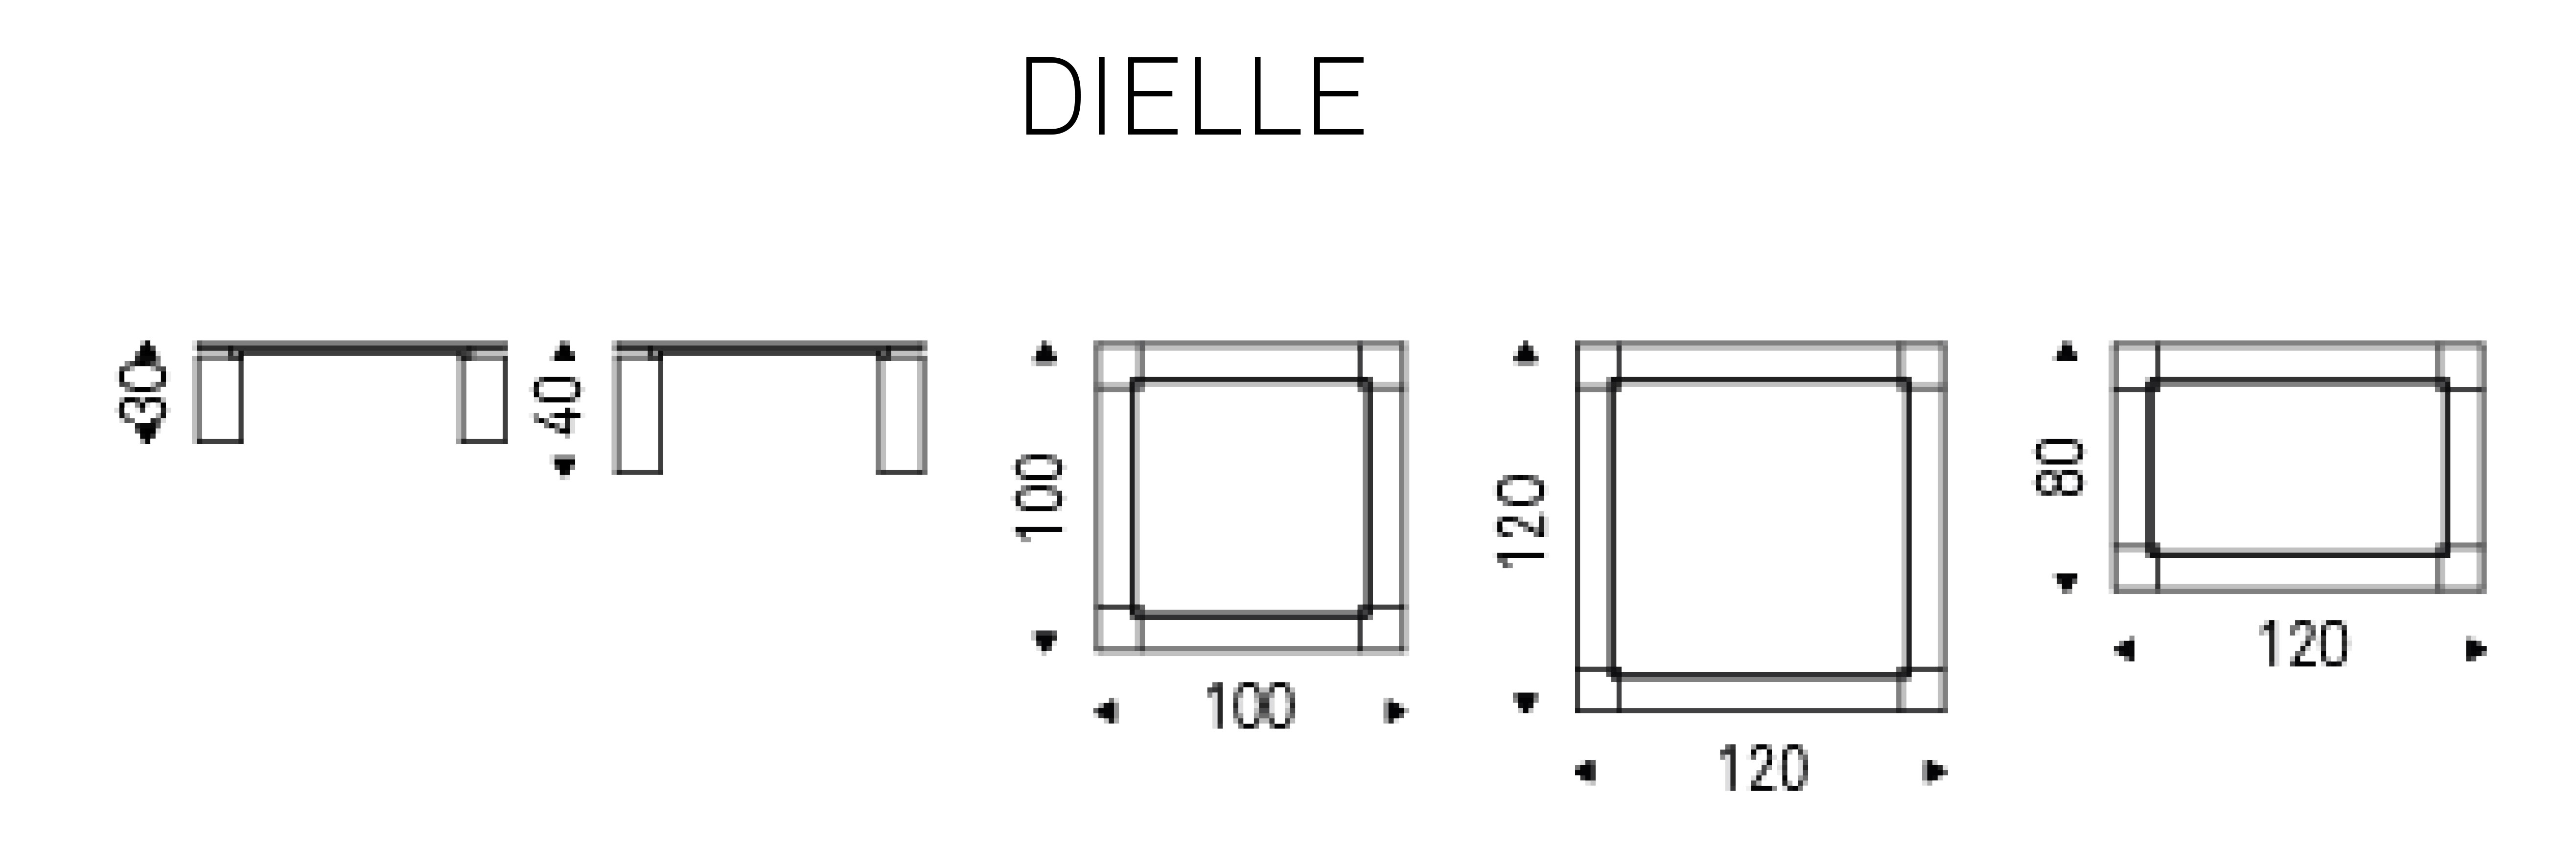 Coffee table Dielle Cattelan Italia dimensions